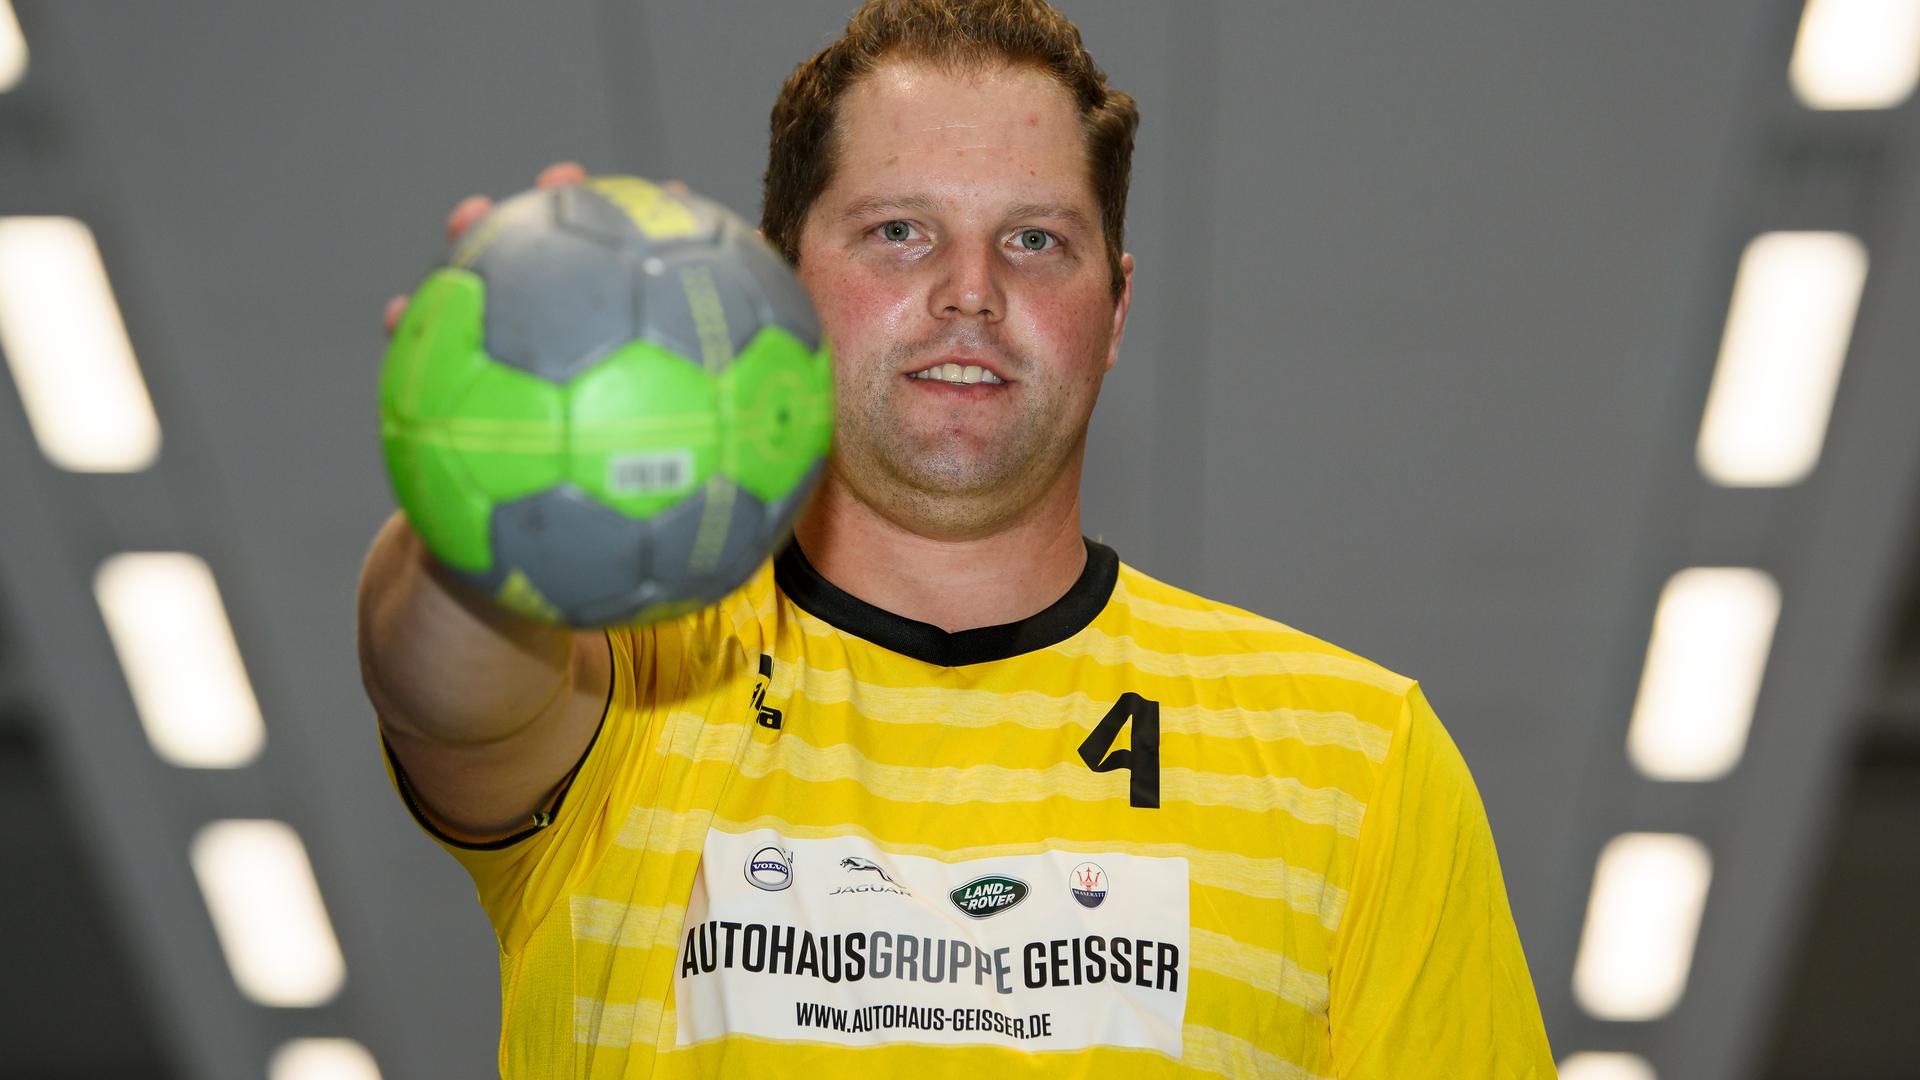 Benjamin Borrmann.

GES/ Handball/ TV Knielingen - Spielerportrait, 15.09.2020 --
